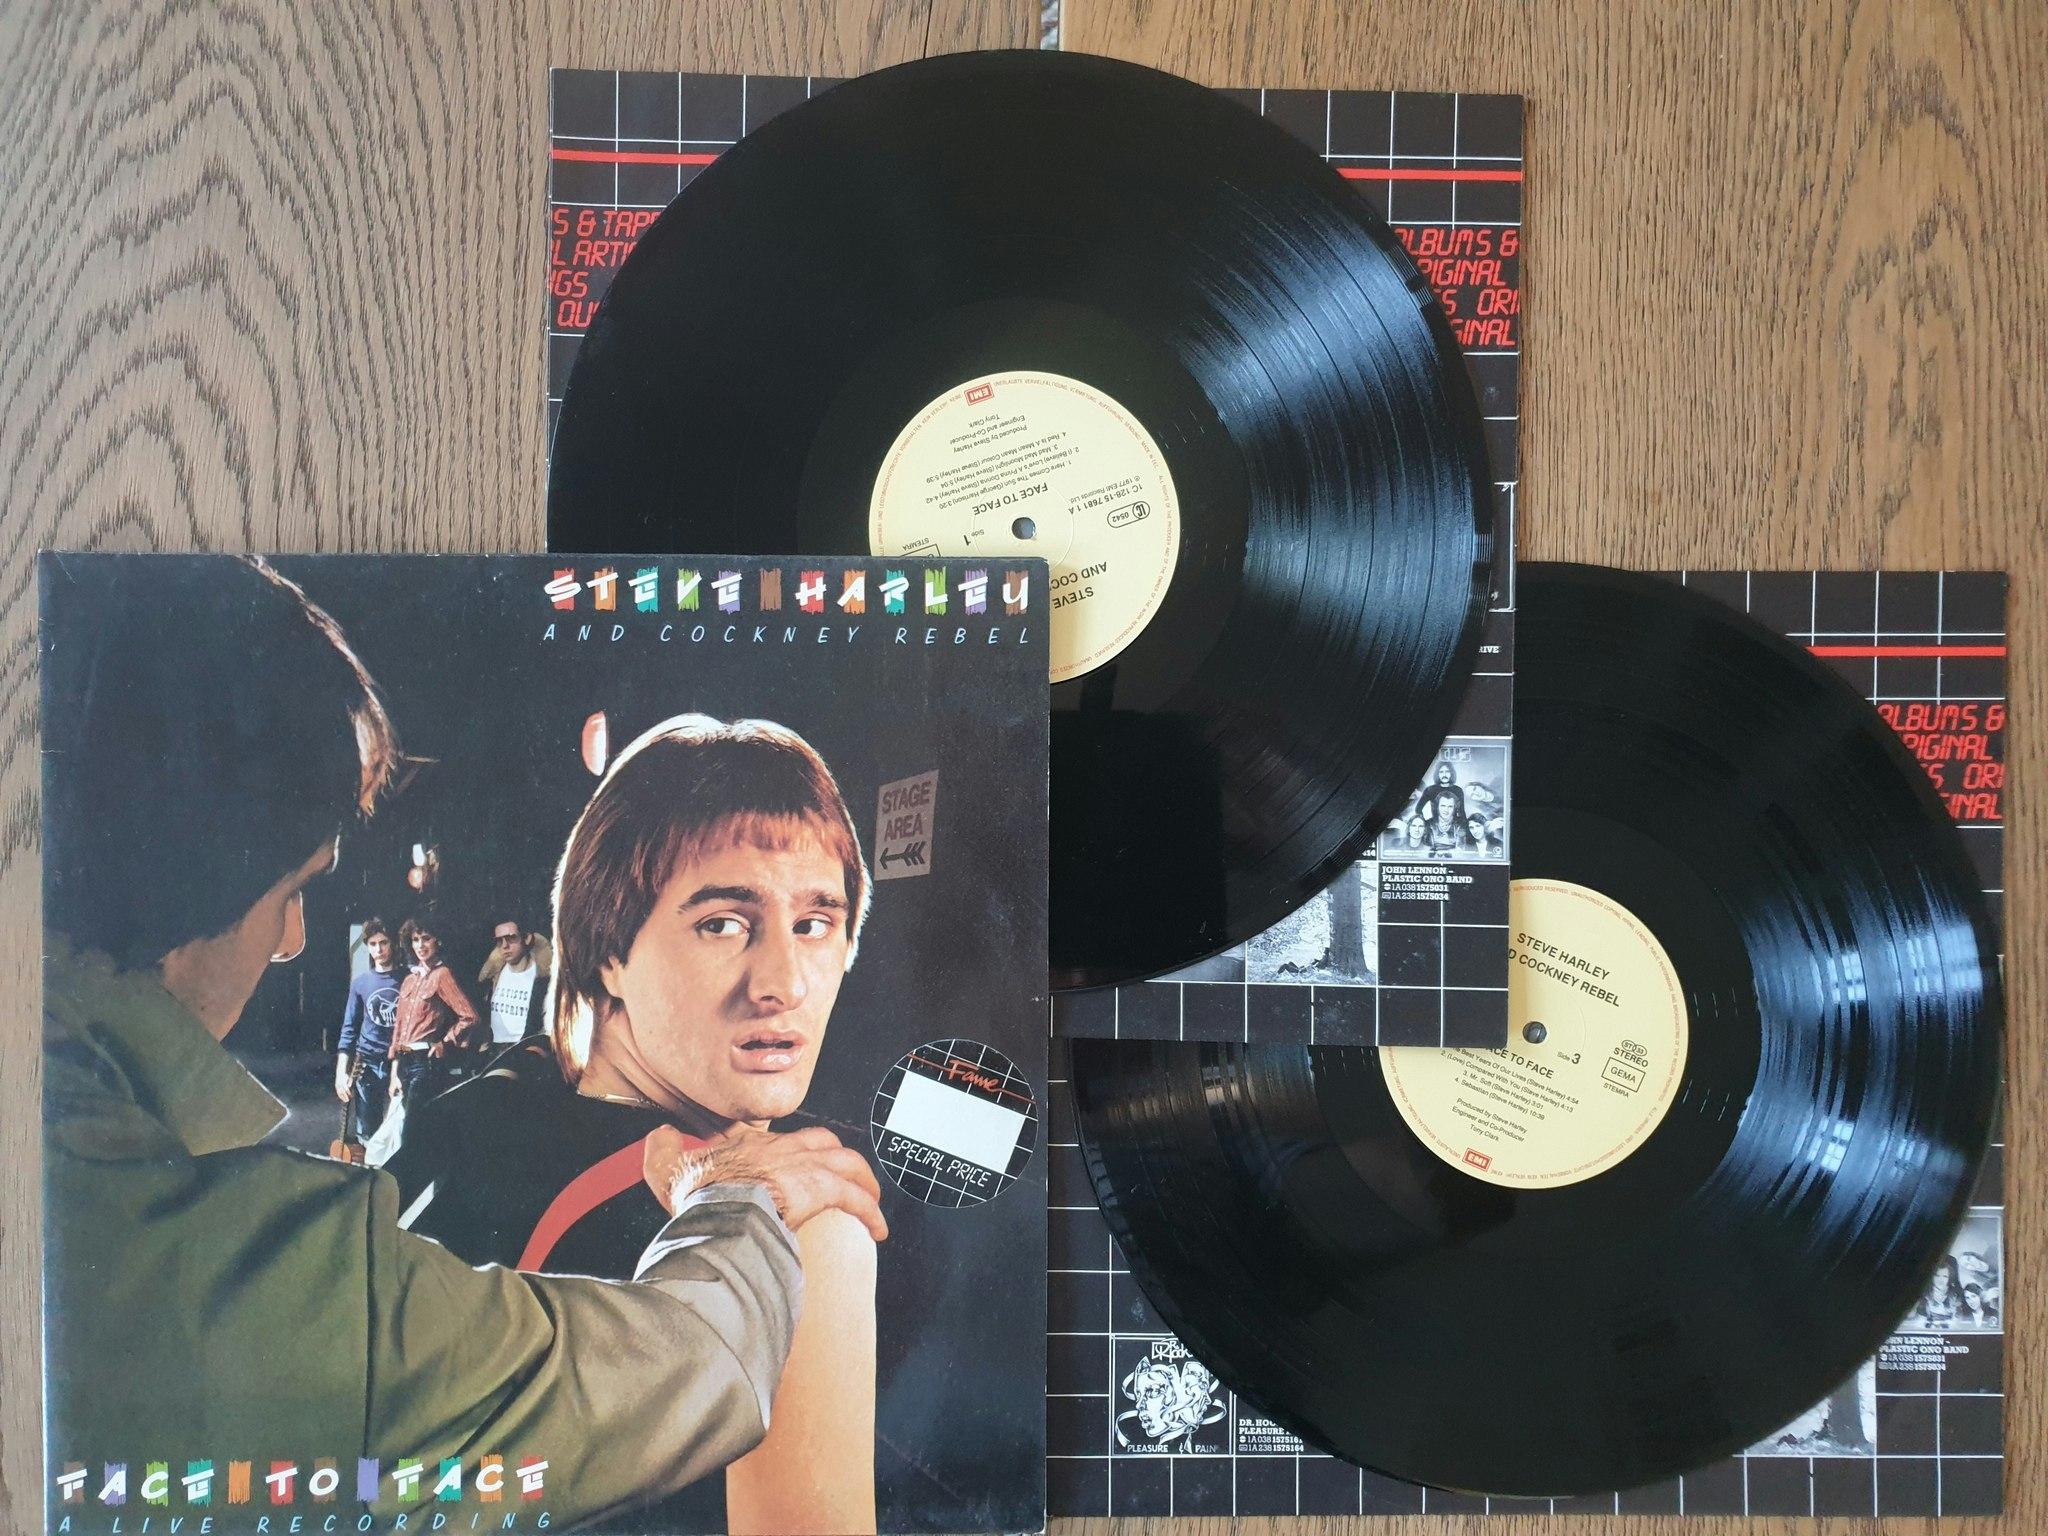 Steve Harley and Cockney Rebel, Face to face. Vinyl 2LP